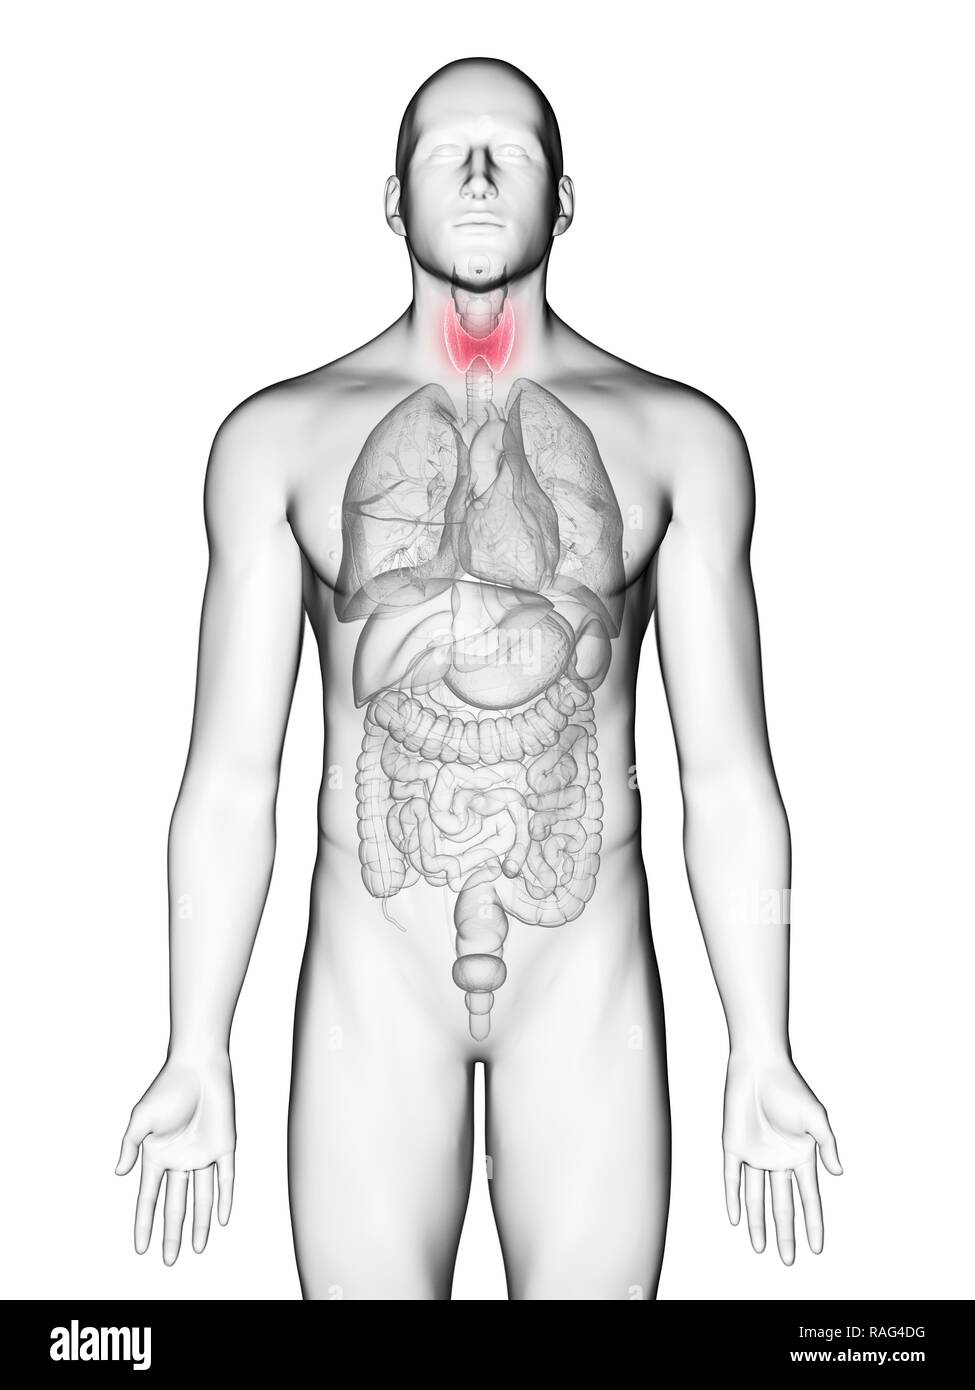 Illustration of a man's thyroid gland. Stock Photo